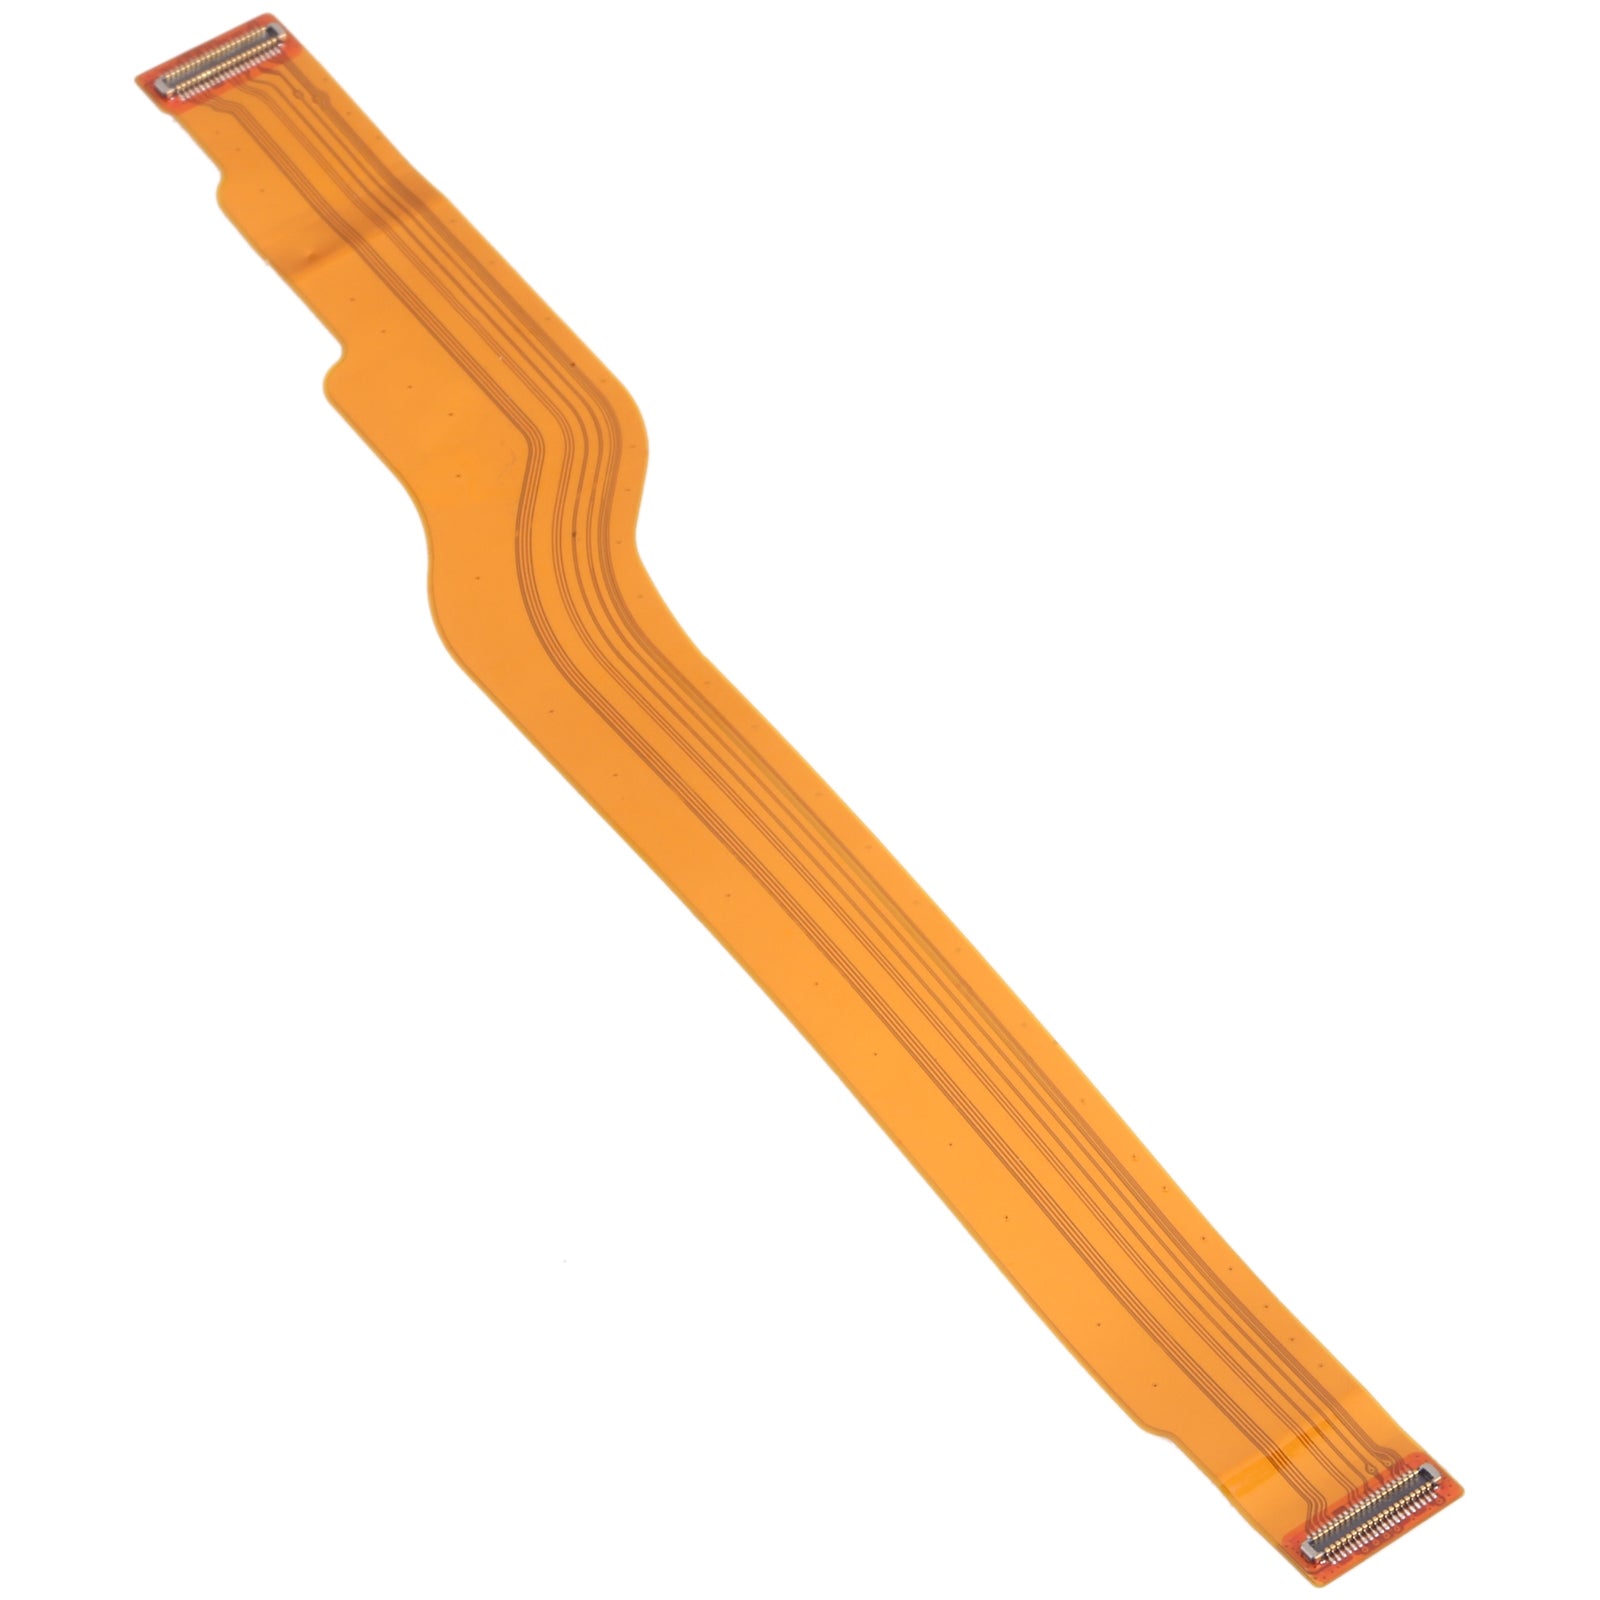 Xiaomi Civi Plate Connector Flex Cable